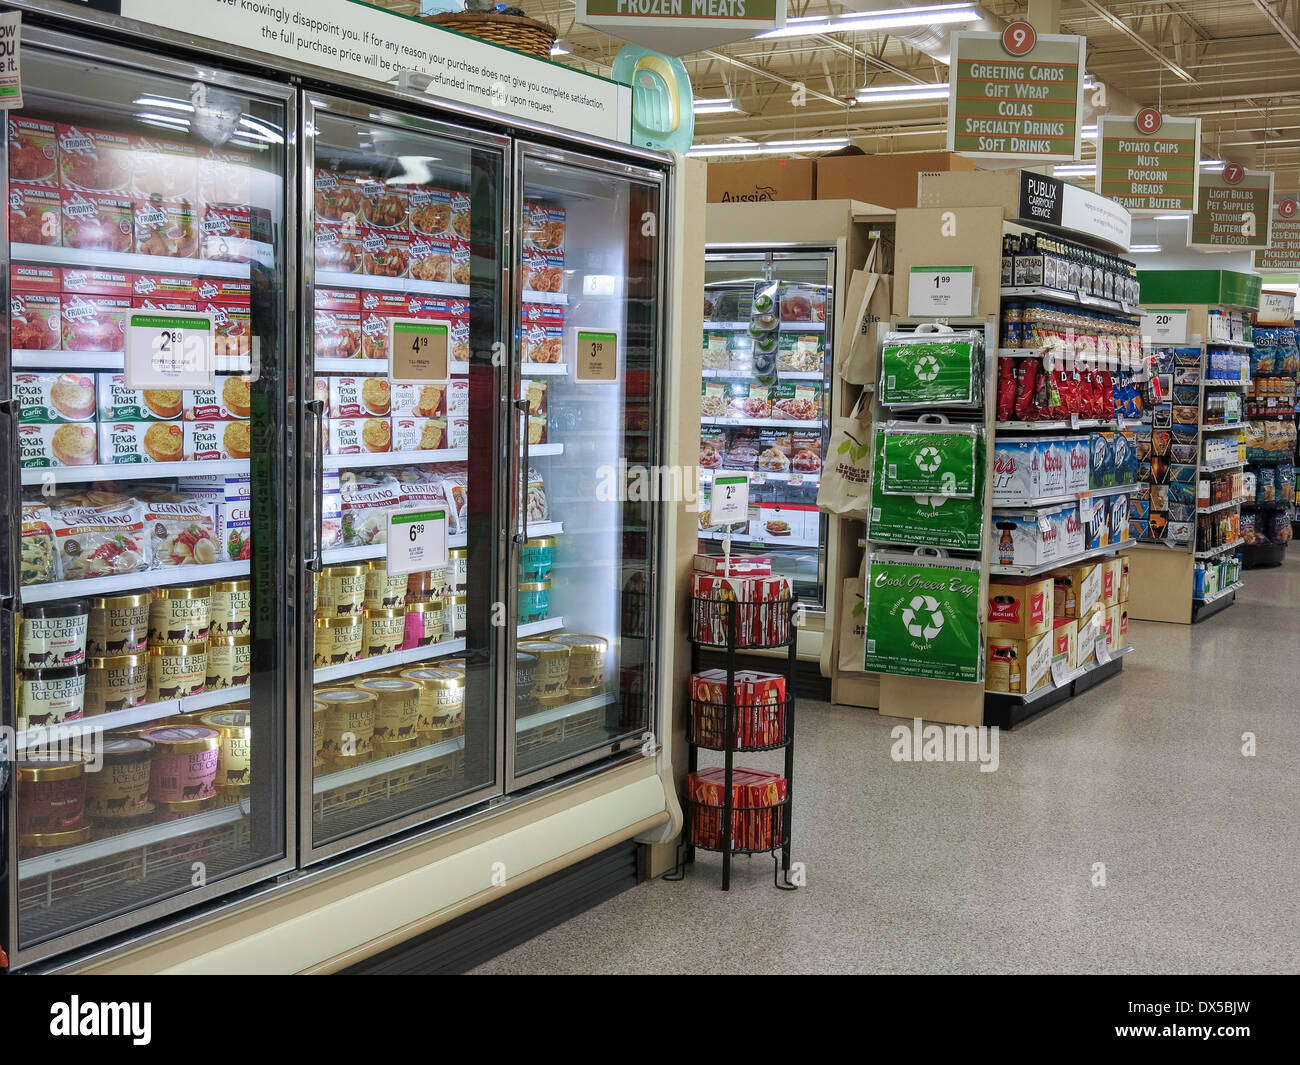 Frozen Foods Section, Publix Super Market in Flagler Beach, Florida Stock Photo